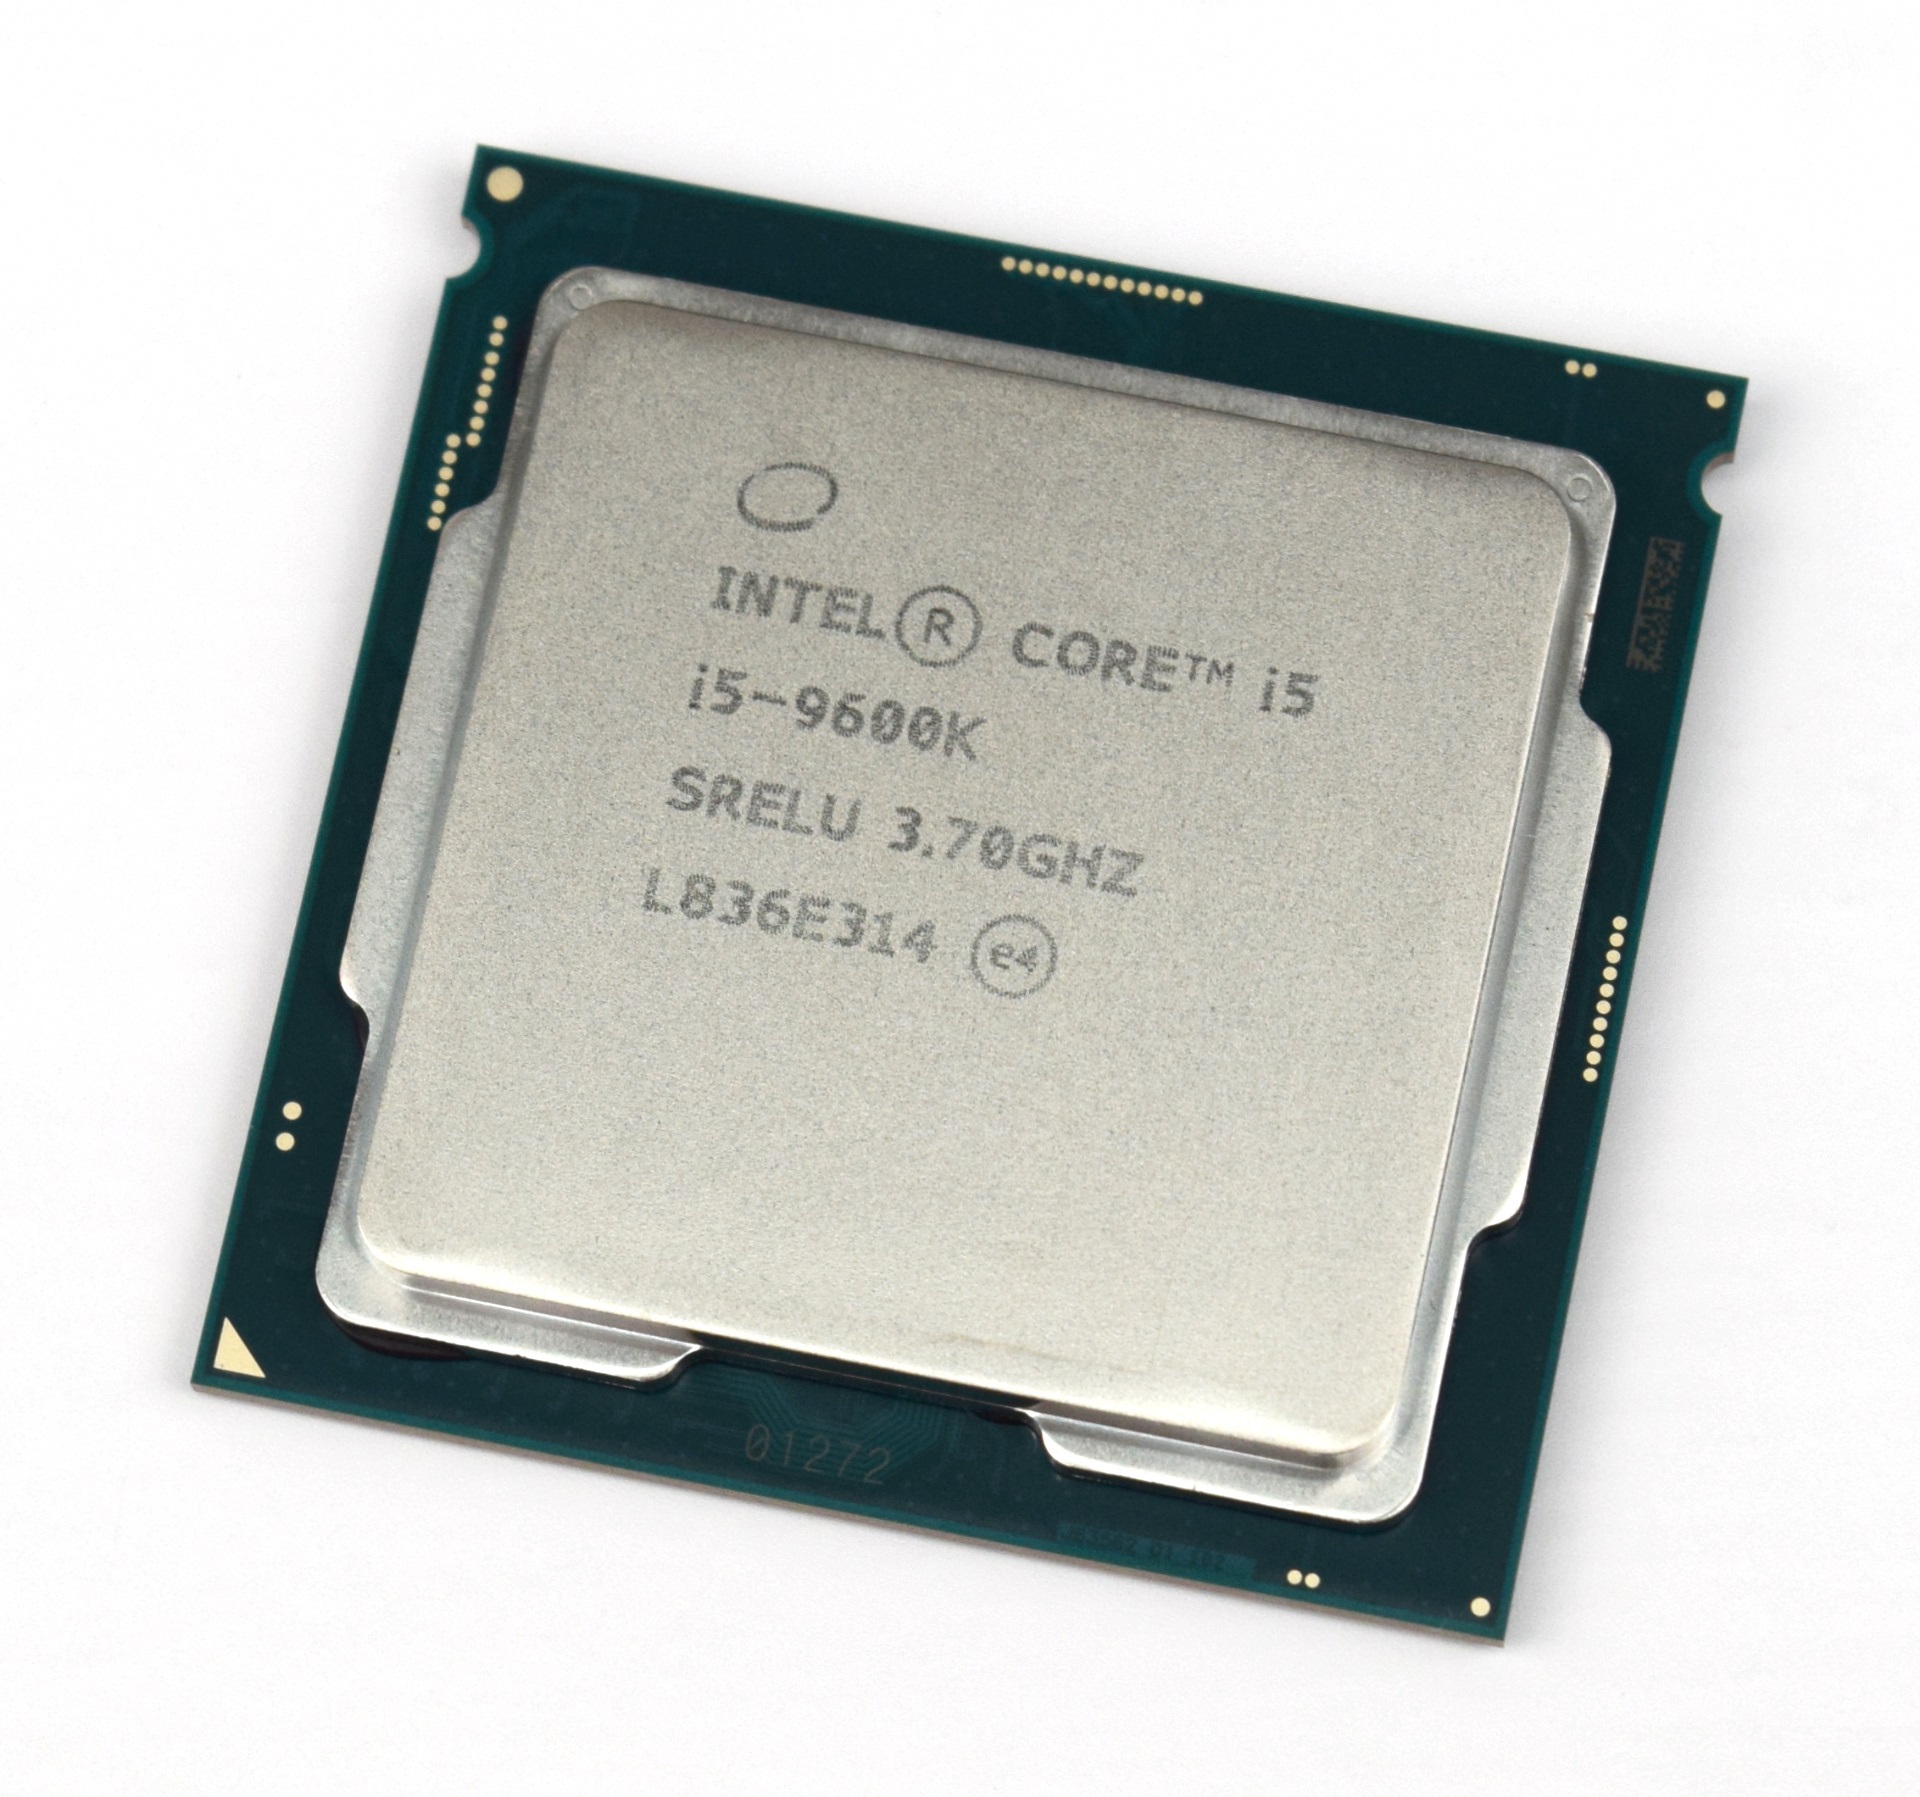 Arashigaoka Rundt om Plateau Intel Core i5-9600K Desktop CPU Review - NotebookCheck.net Reviews